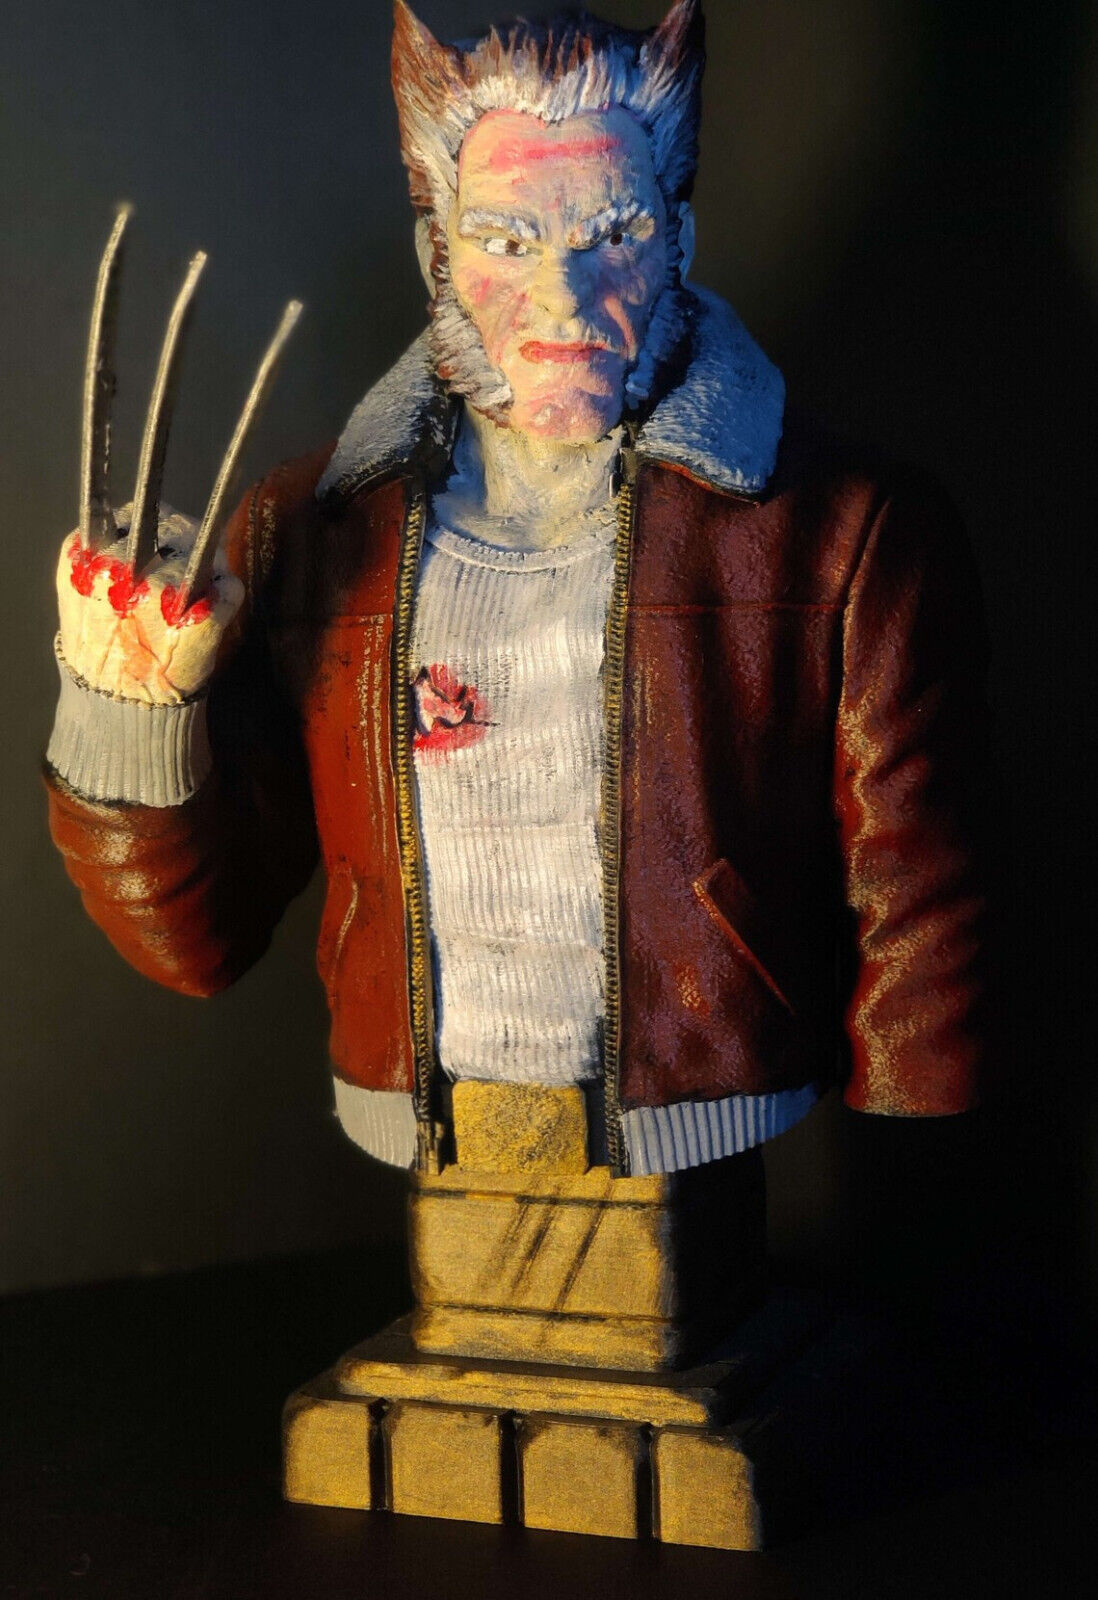 Wolverine Old Man Logan Fan Art Bust - 10in Marvel Inspired Statue Handpainted